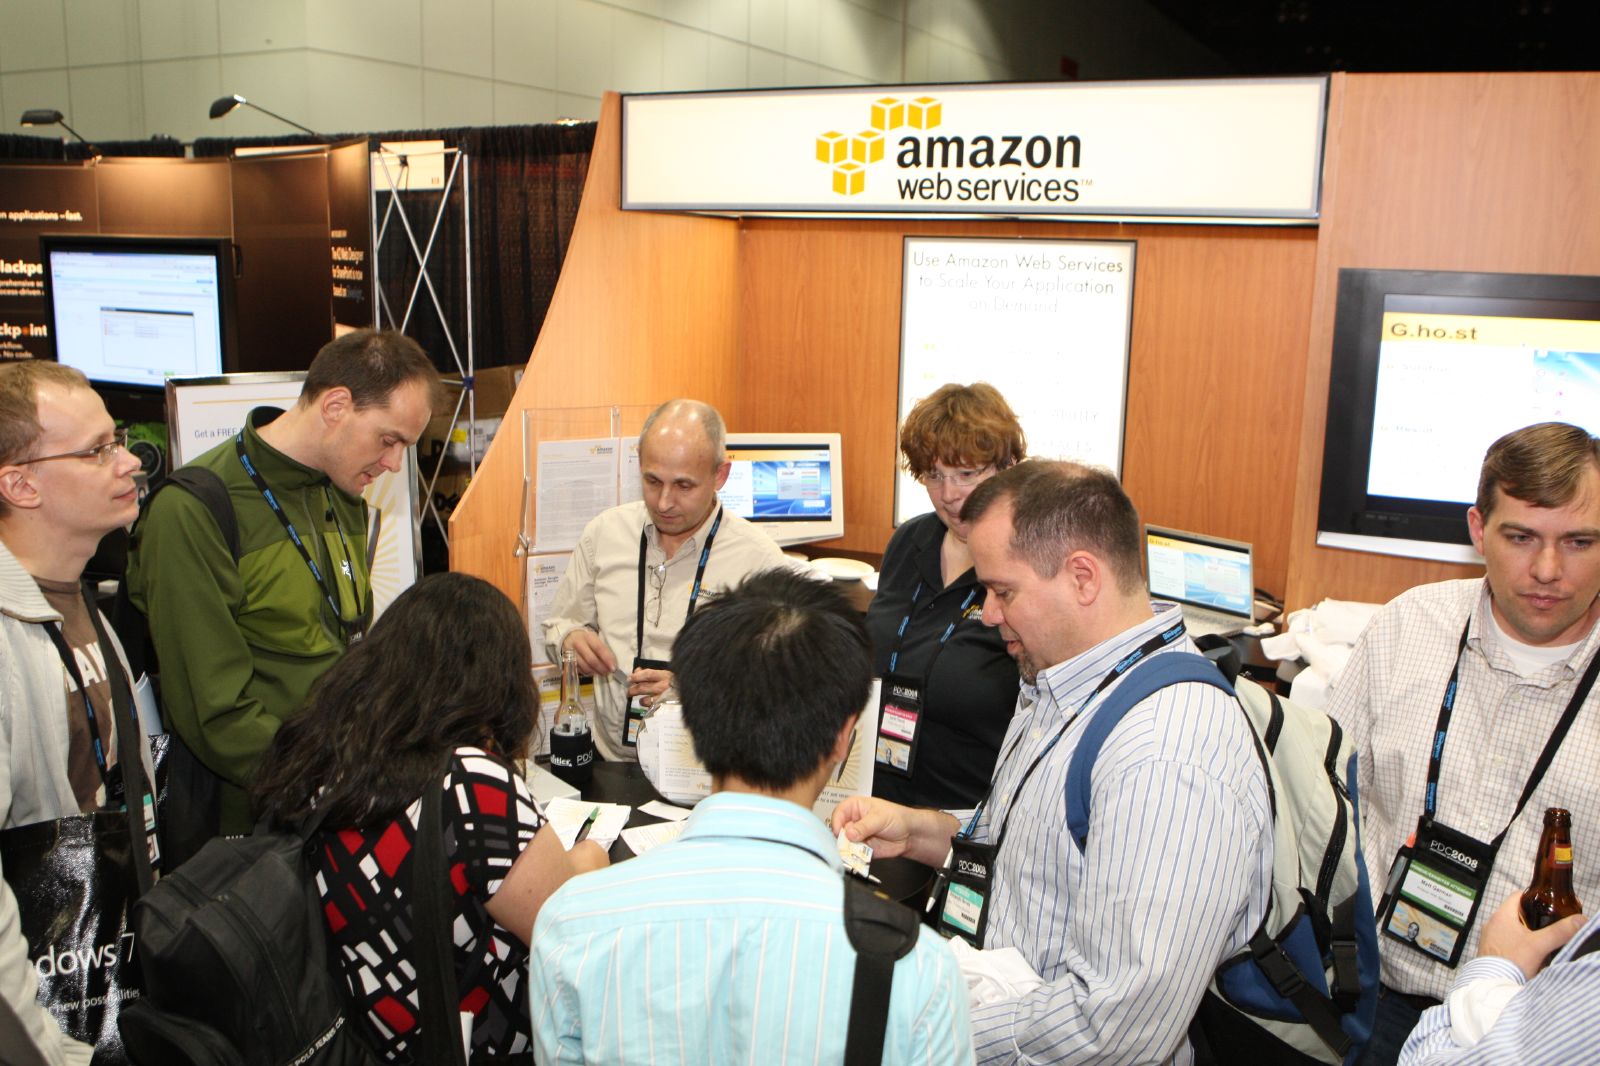 Amazon Web Services brings a crowd.